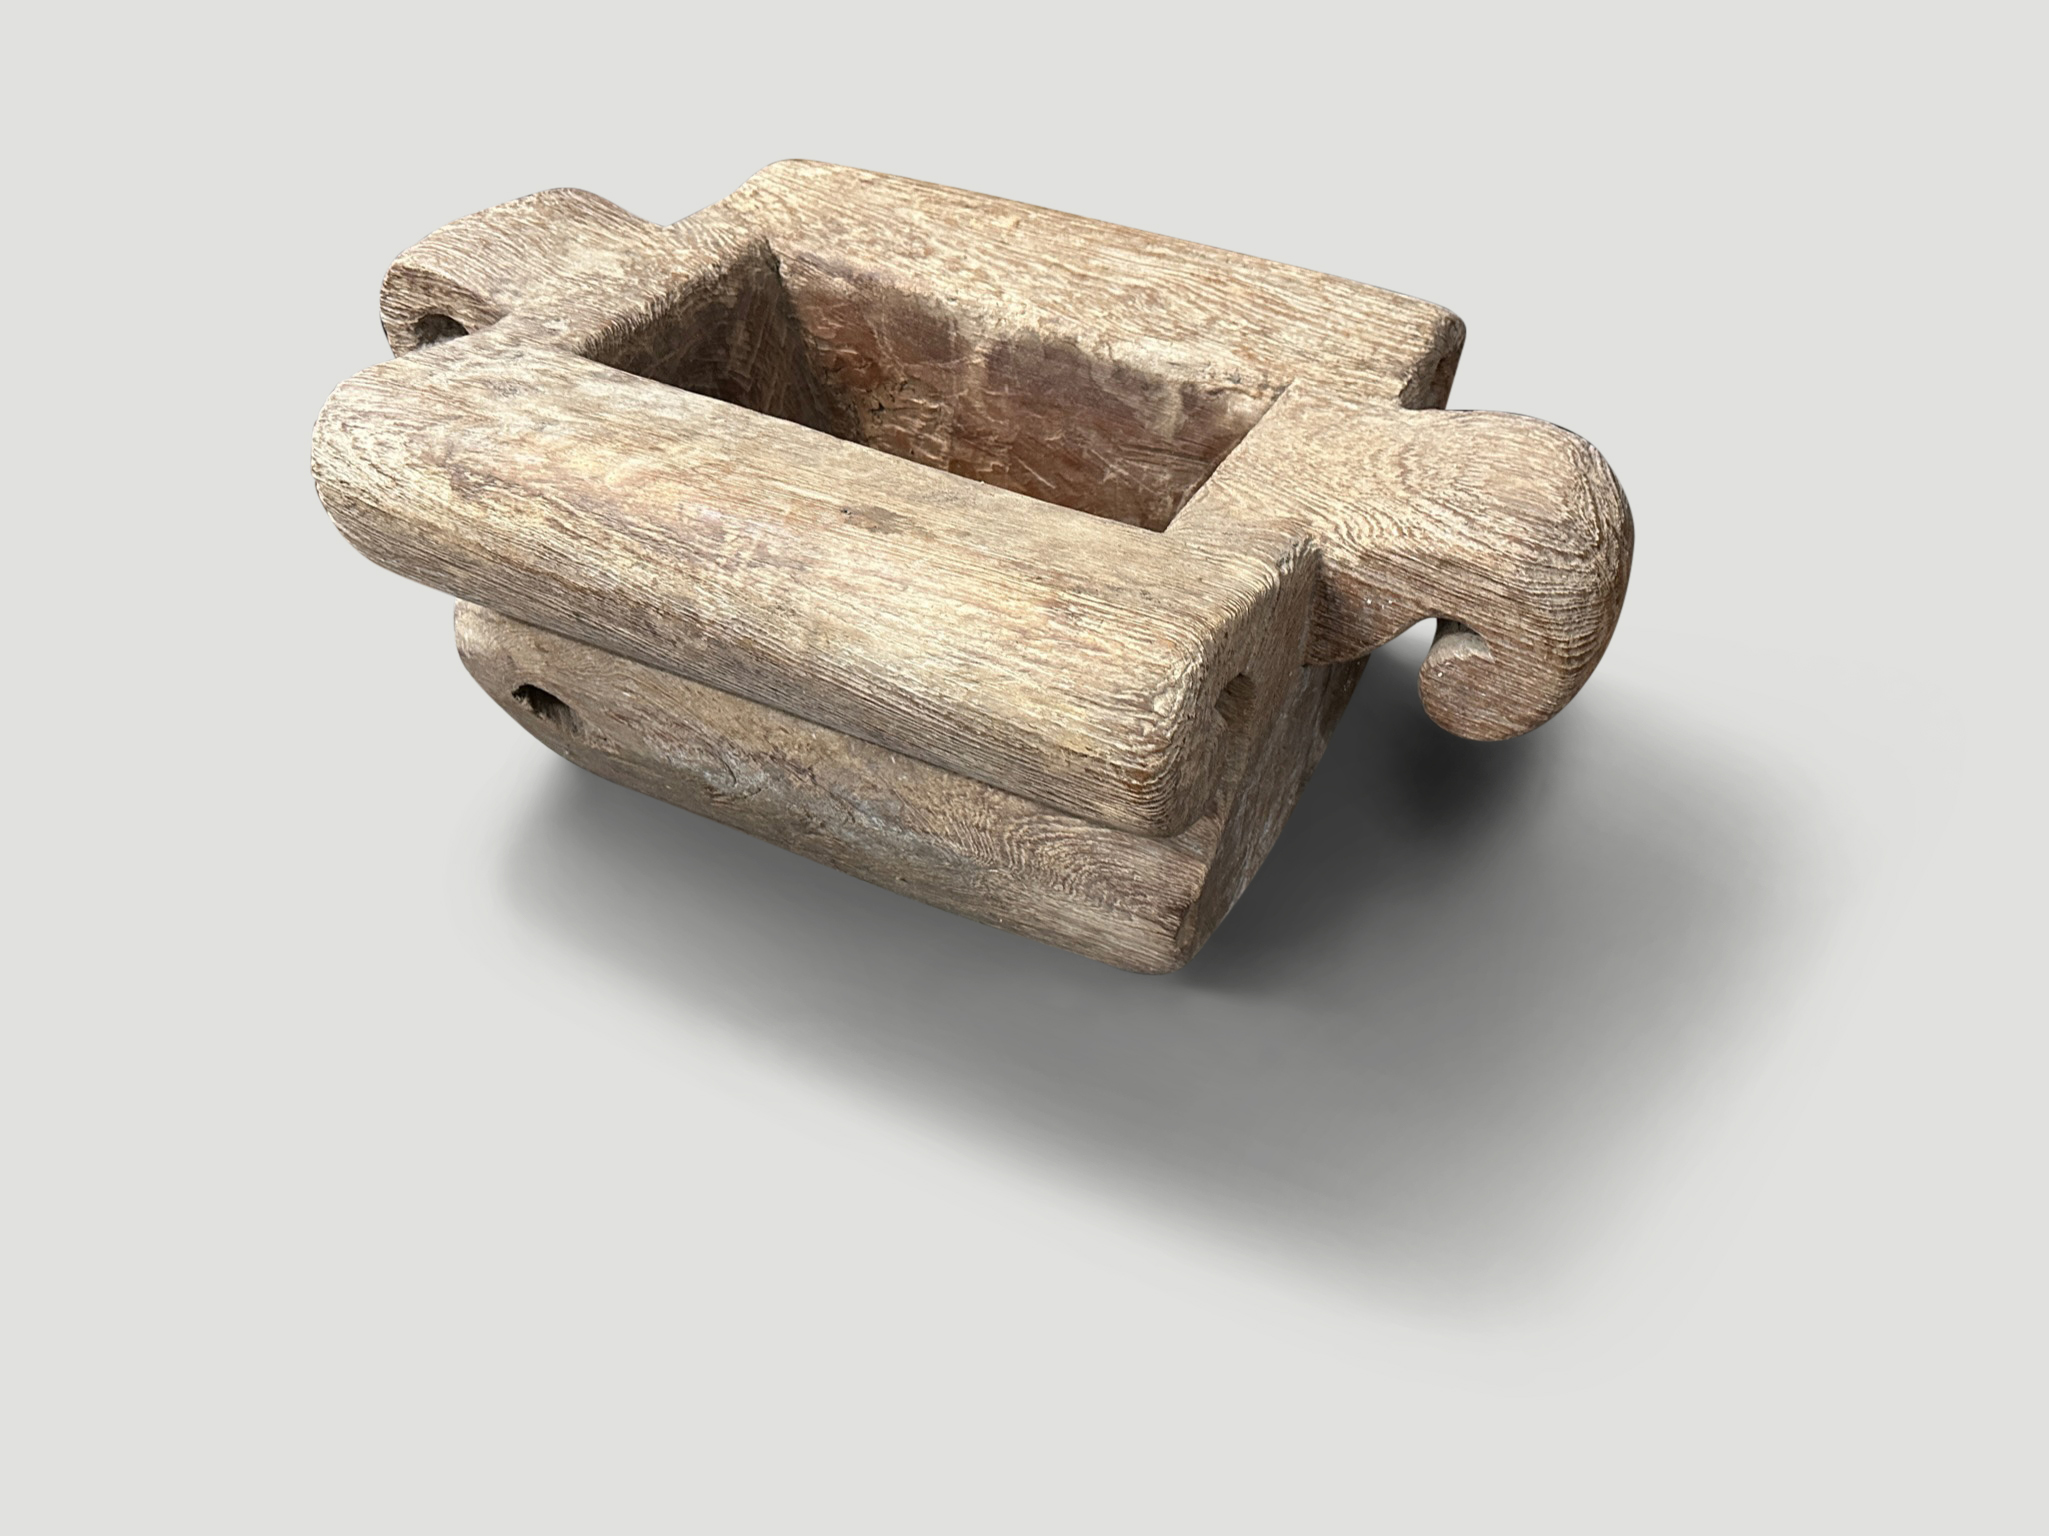 Century old teak wood hand carved vessel